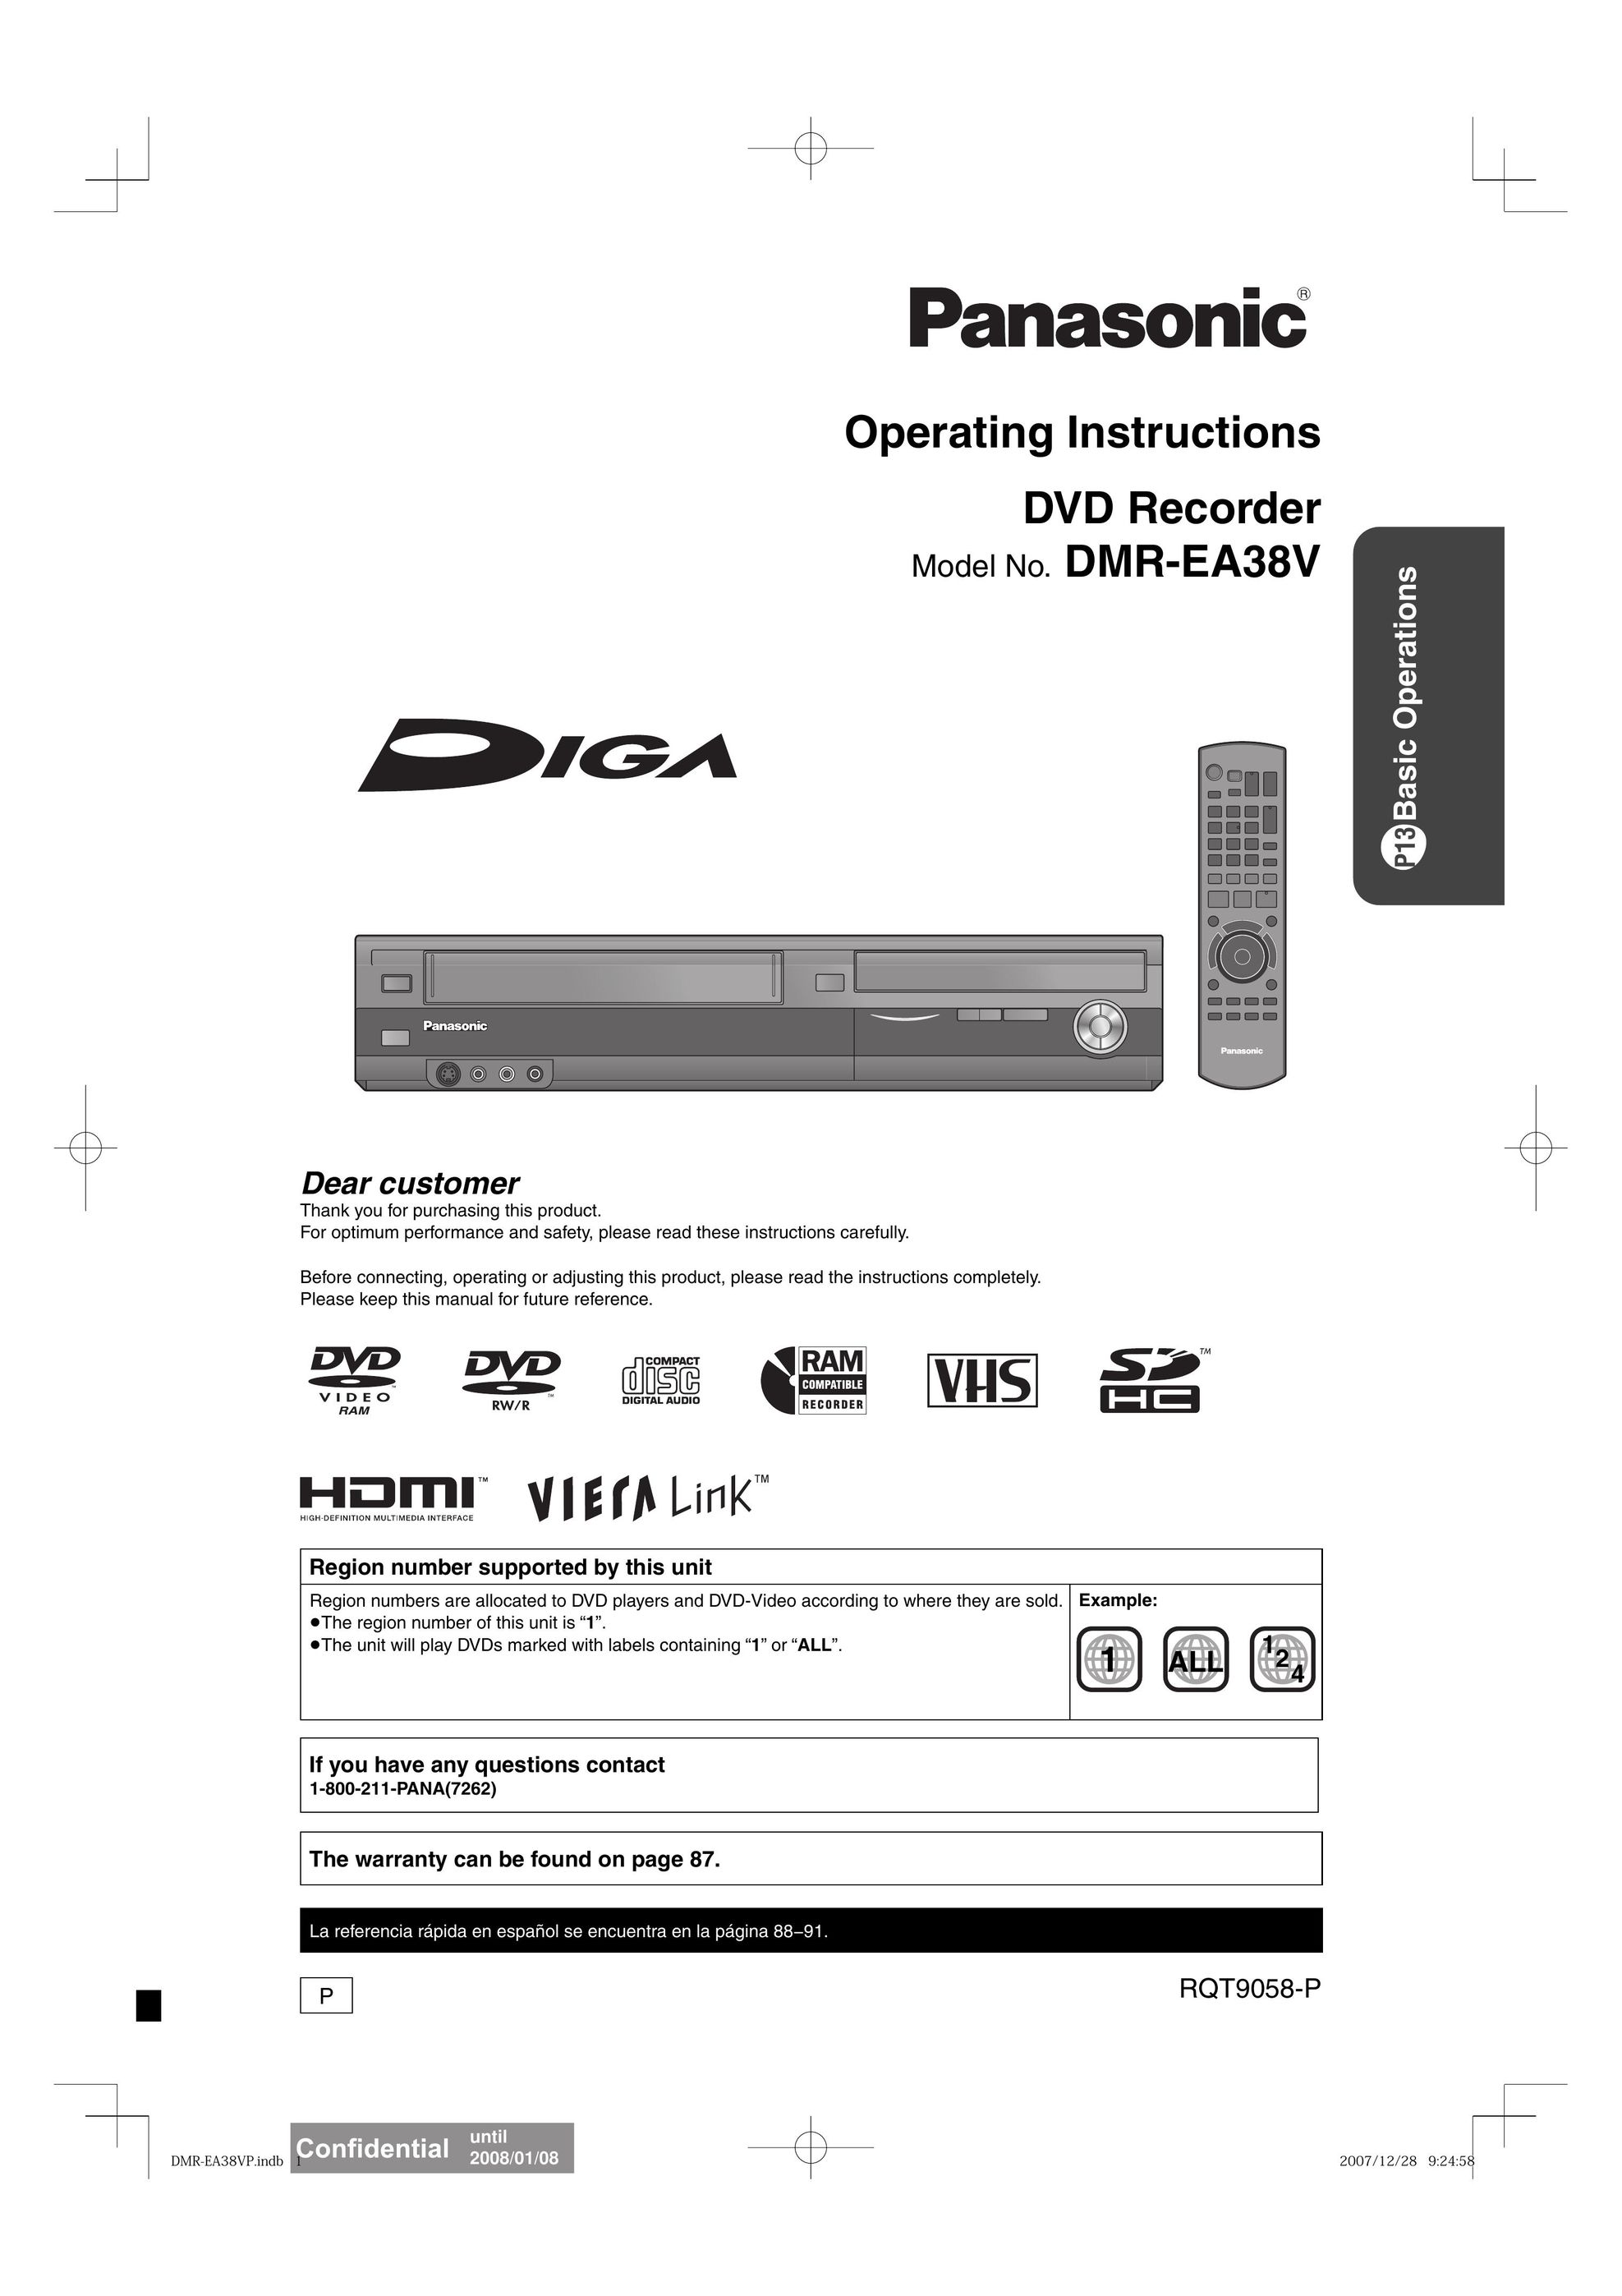 Panasonic DMR-EA38V DVD Recorder User Manual